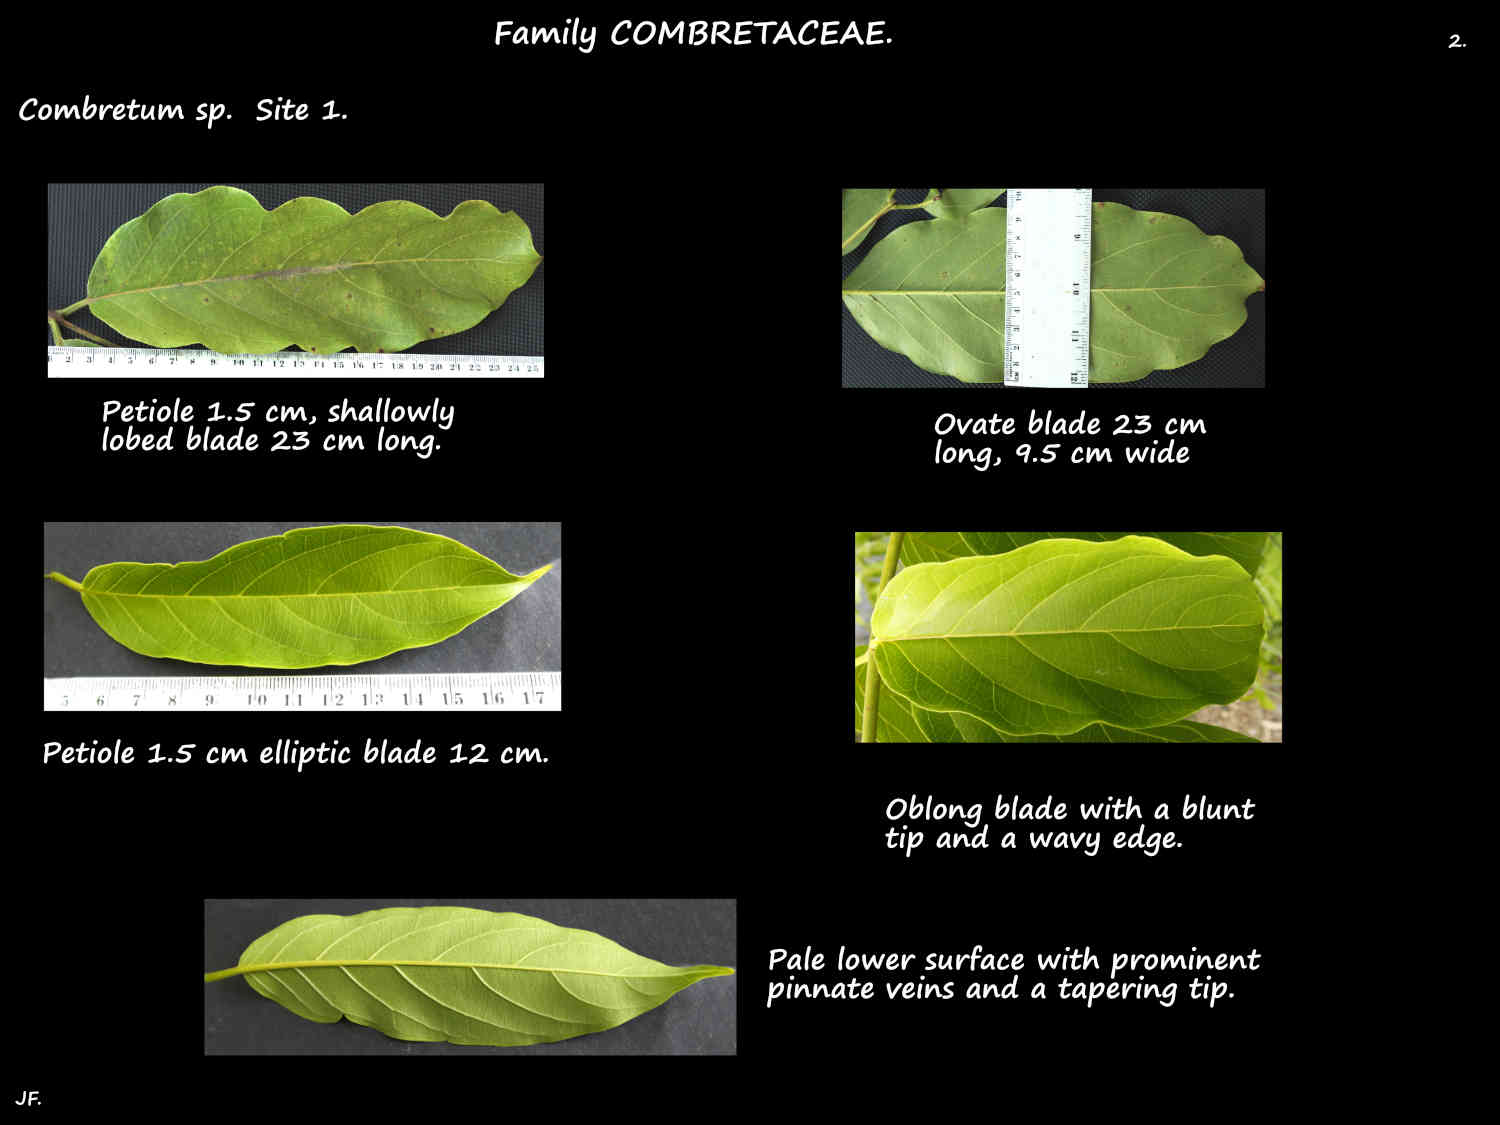 2 Combretum leaves